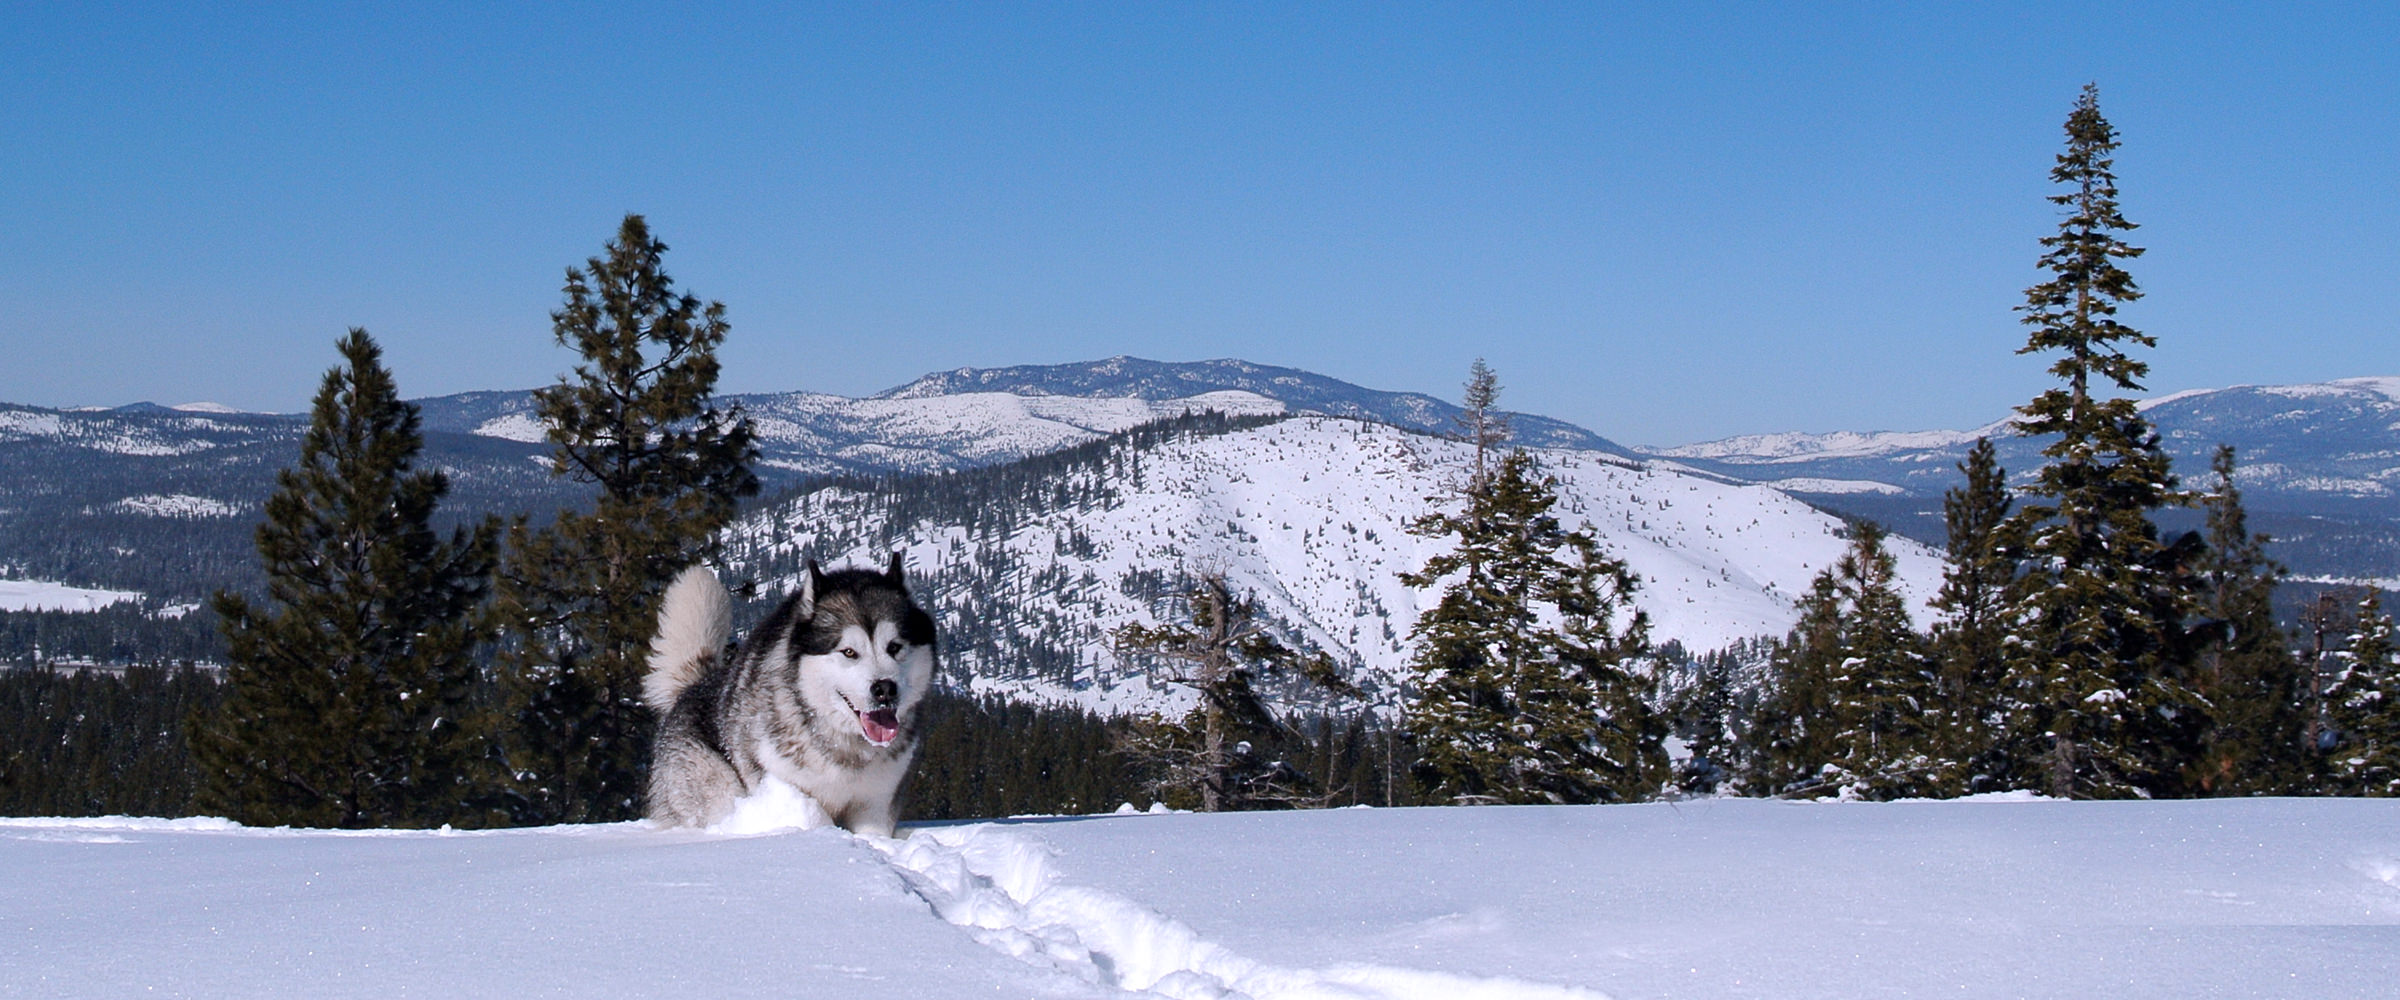 Gray & white Chase Alaskan Malamute stud dog at Snowlion